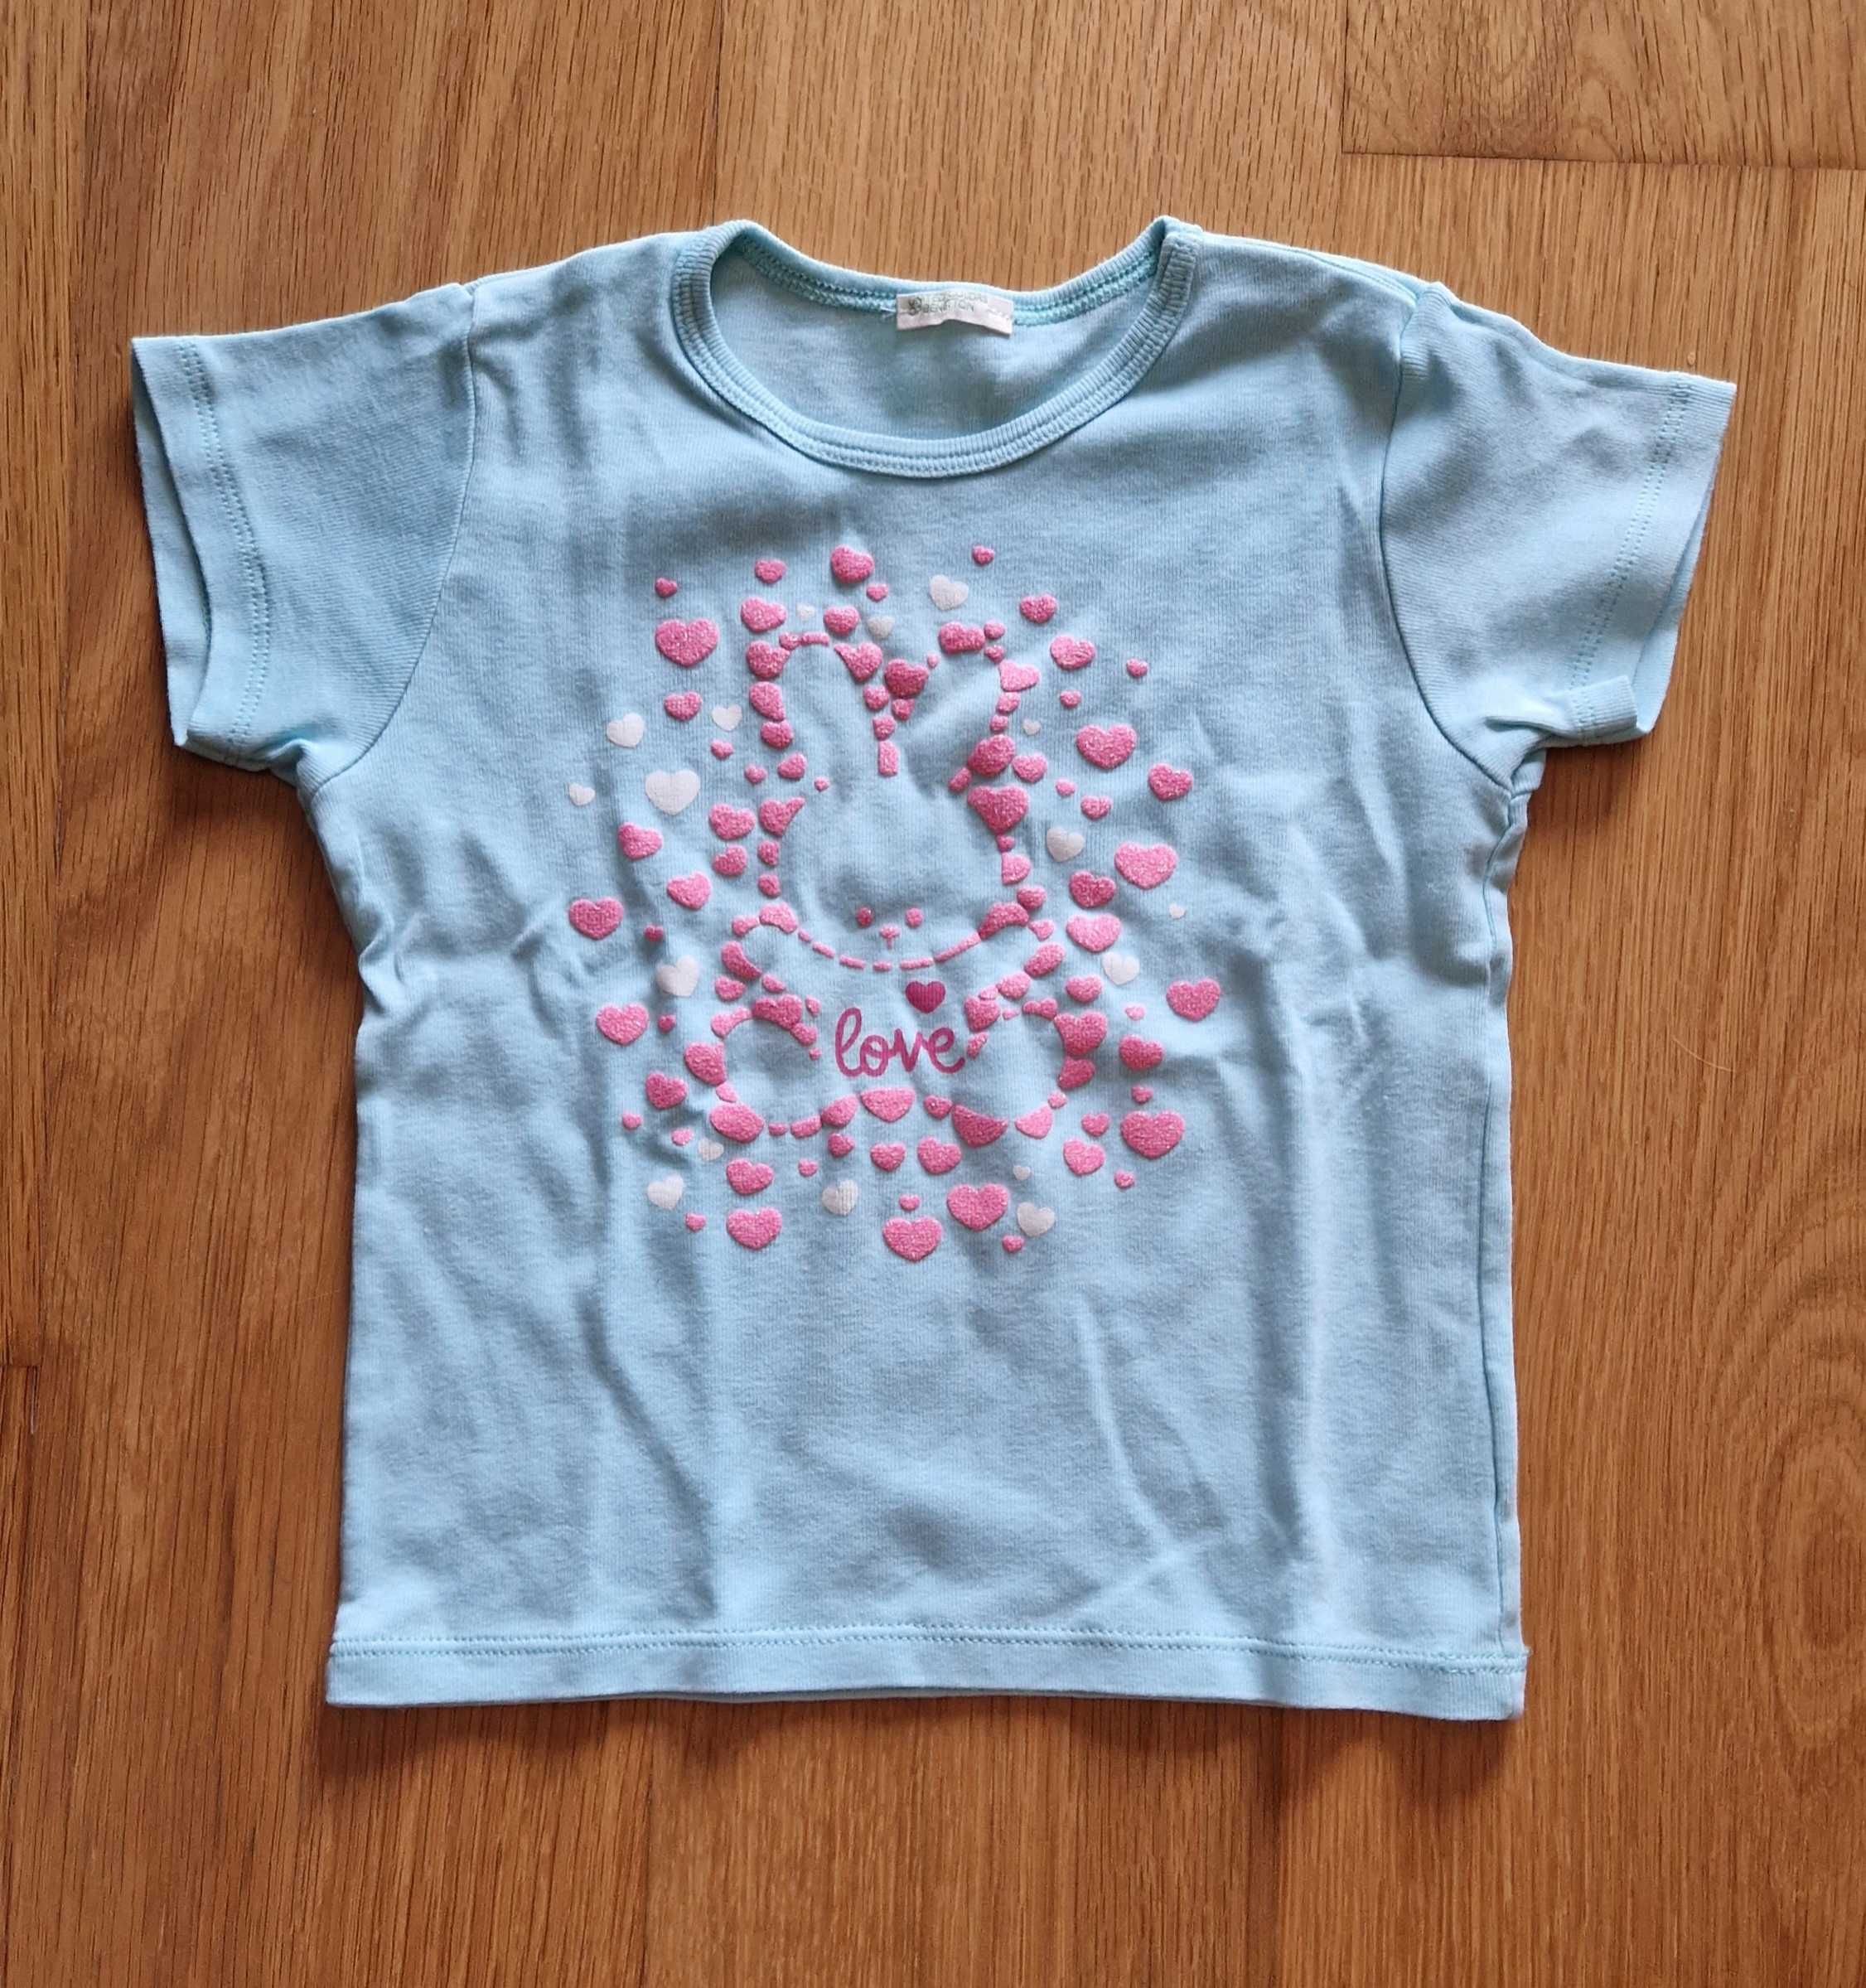 Tshirt de Menina Tamanho 2 Anos - Benetton